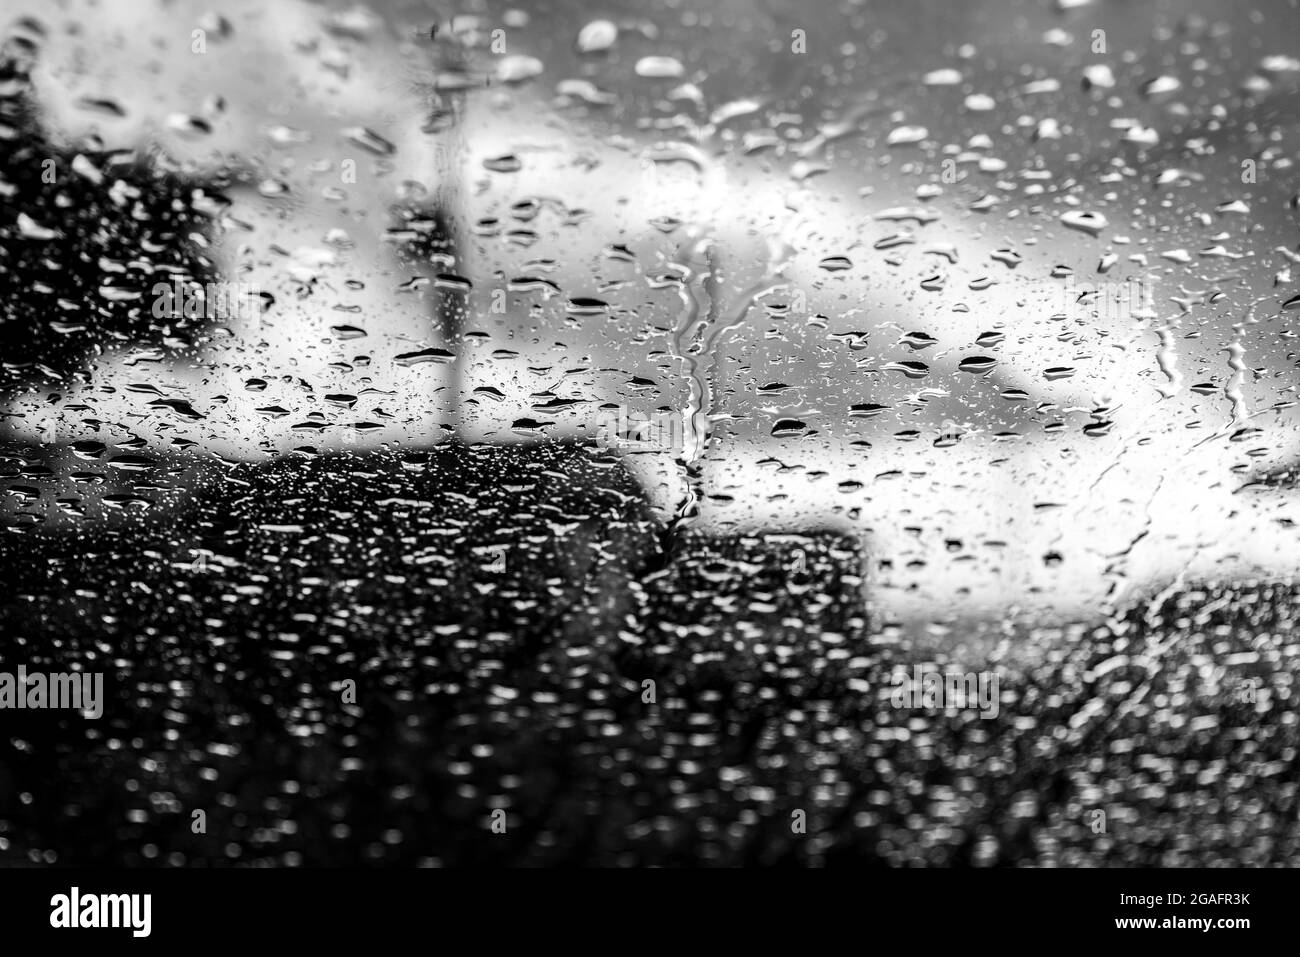 Bokeh, chuva, gotas de água pelo vidro do carro. Dia chuvoso. Lanternes de carros desfocadas. Colorido. Banque D'Images